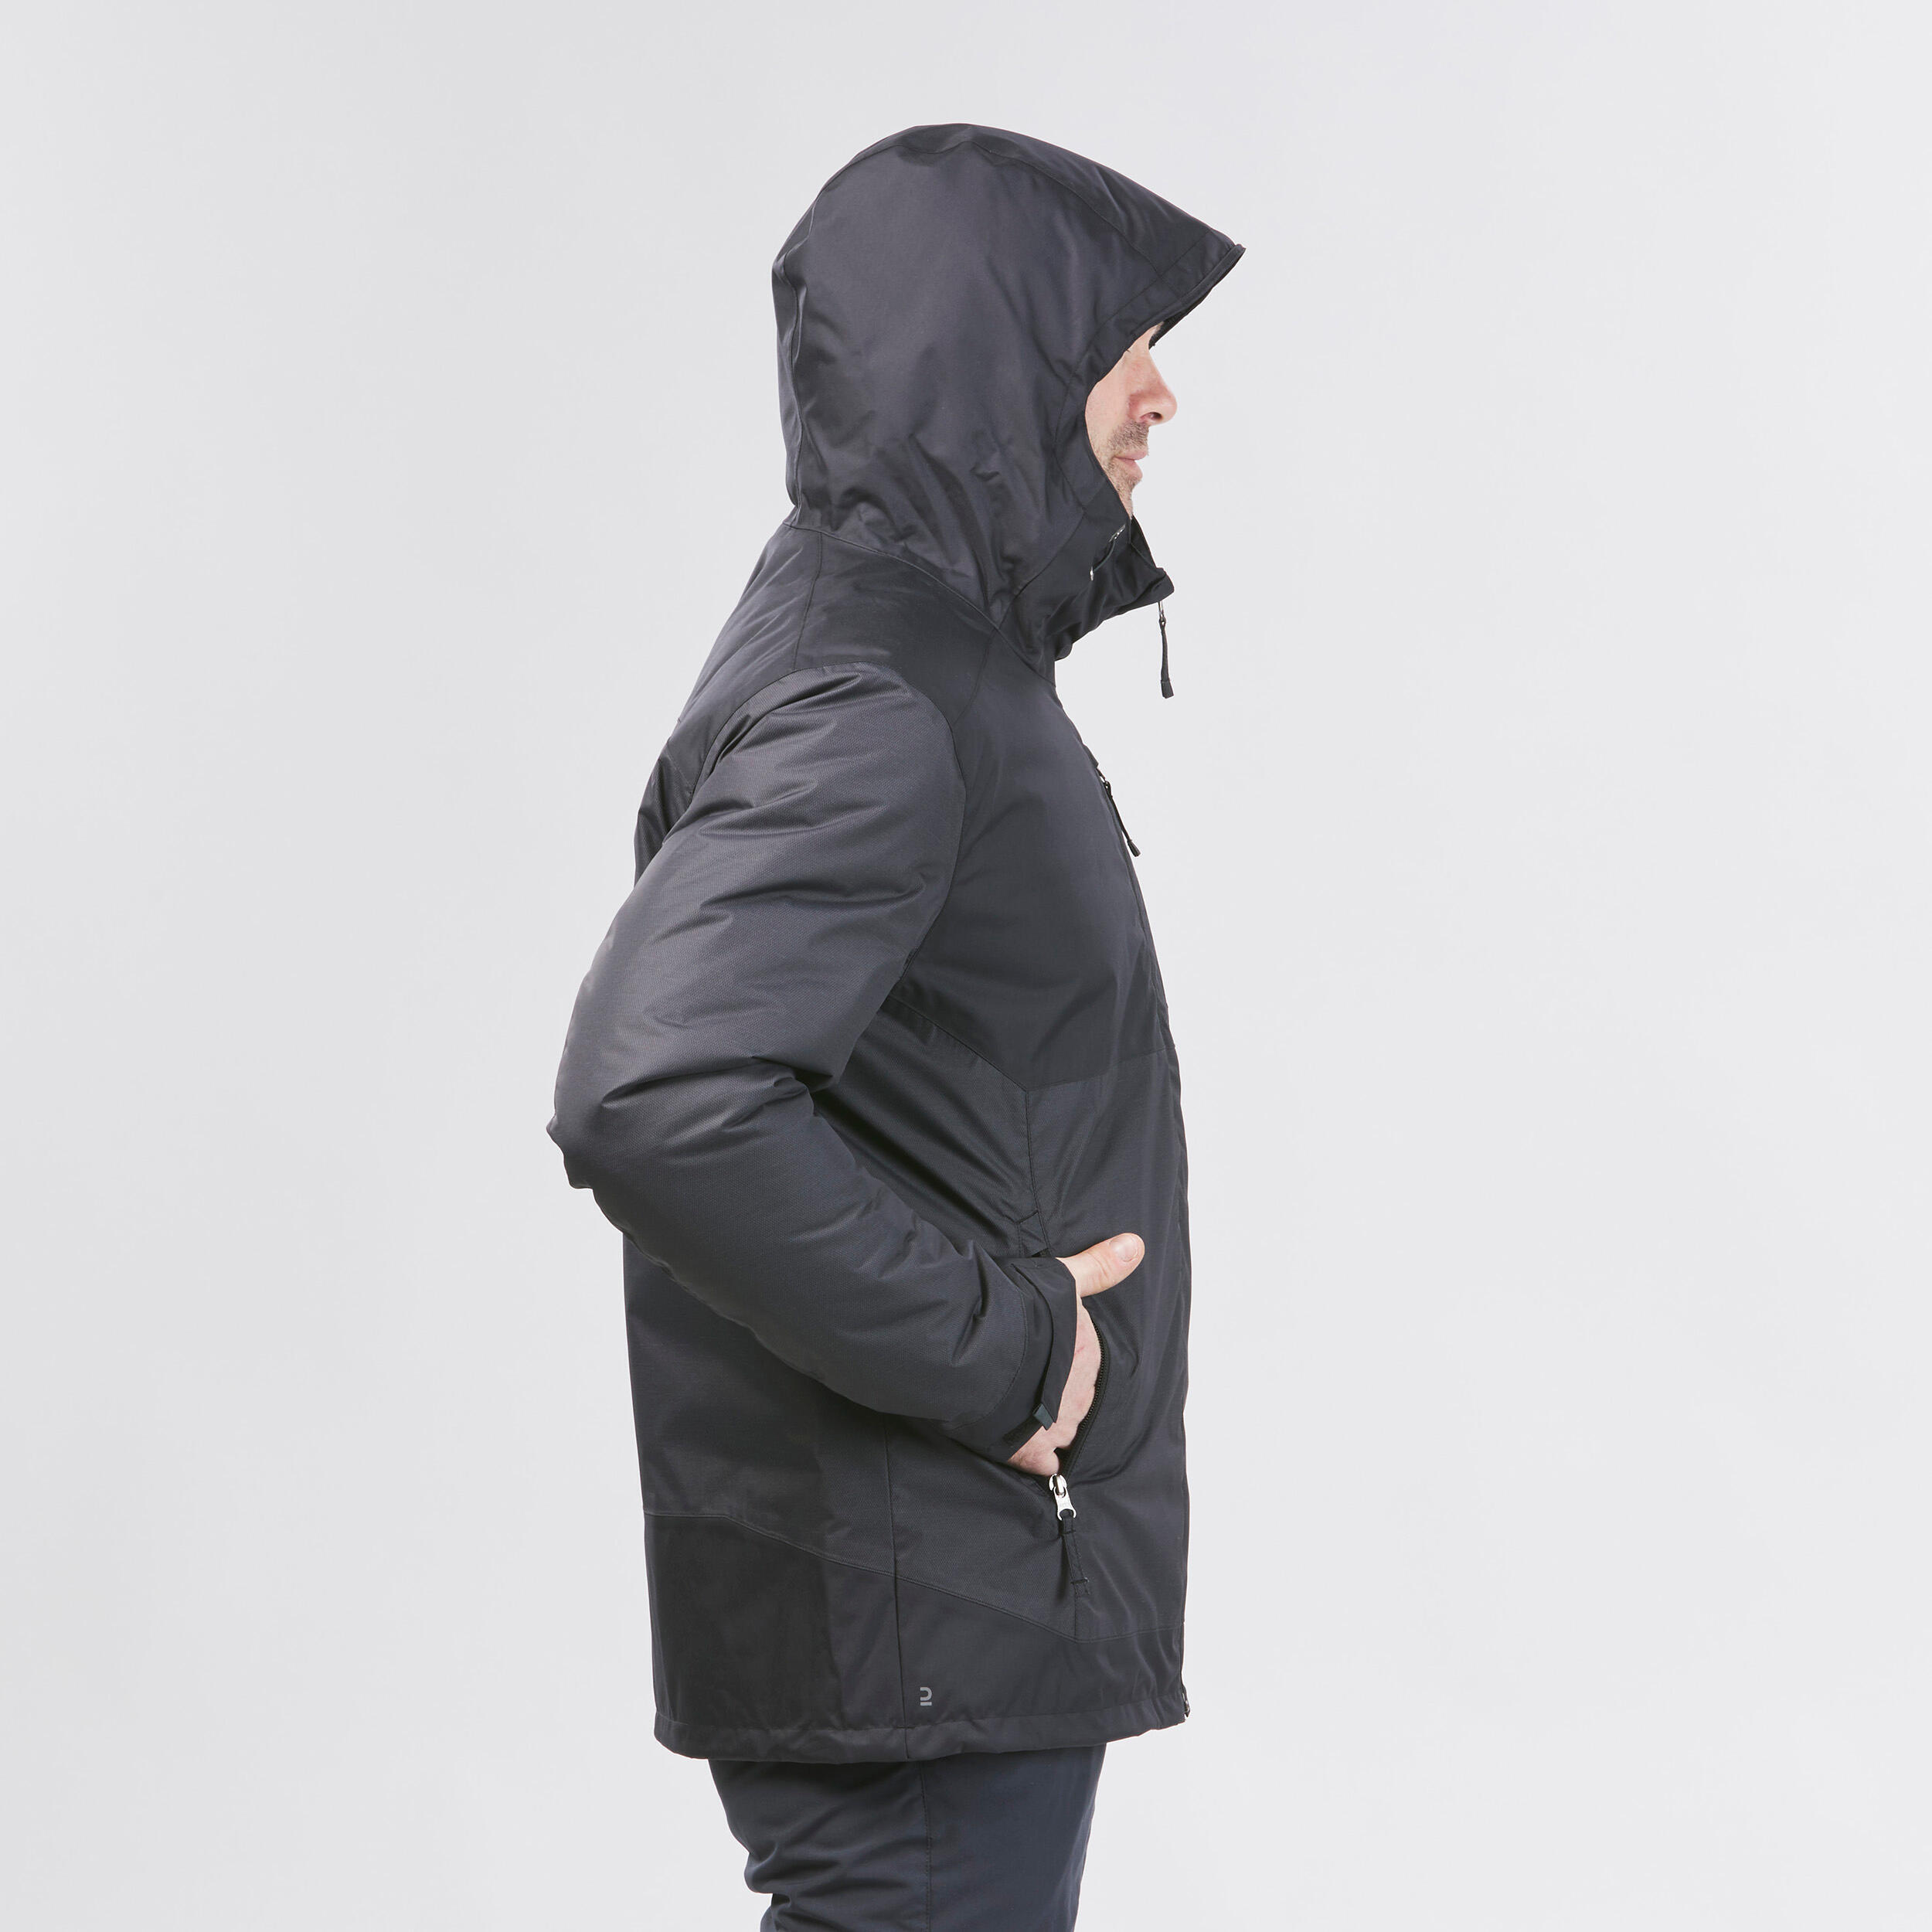 Men’s hiking waterproof winter jacket - SH500 -10°C 5/14